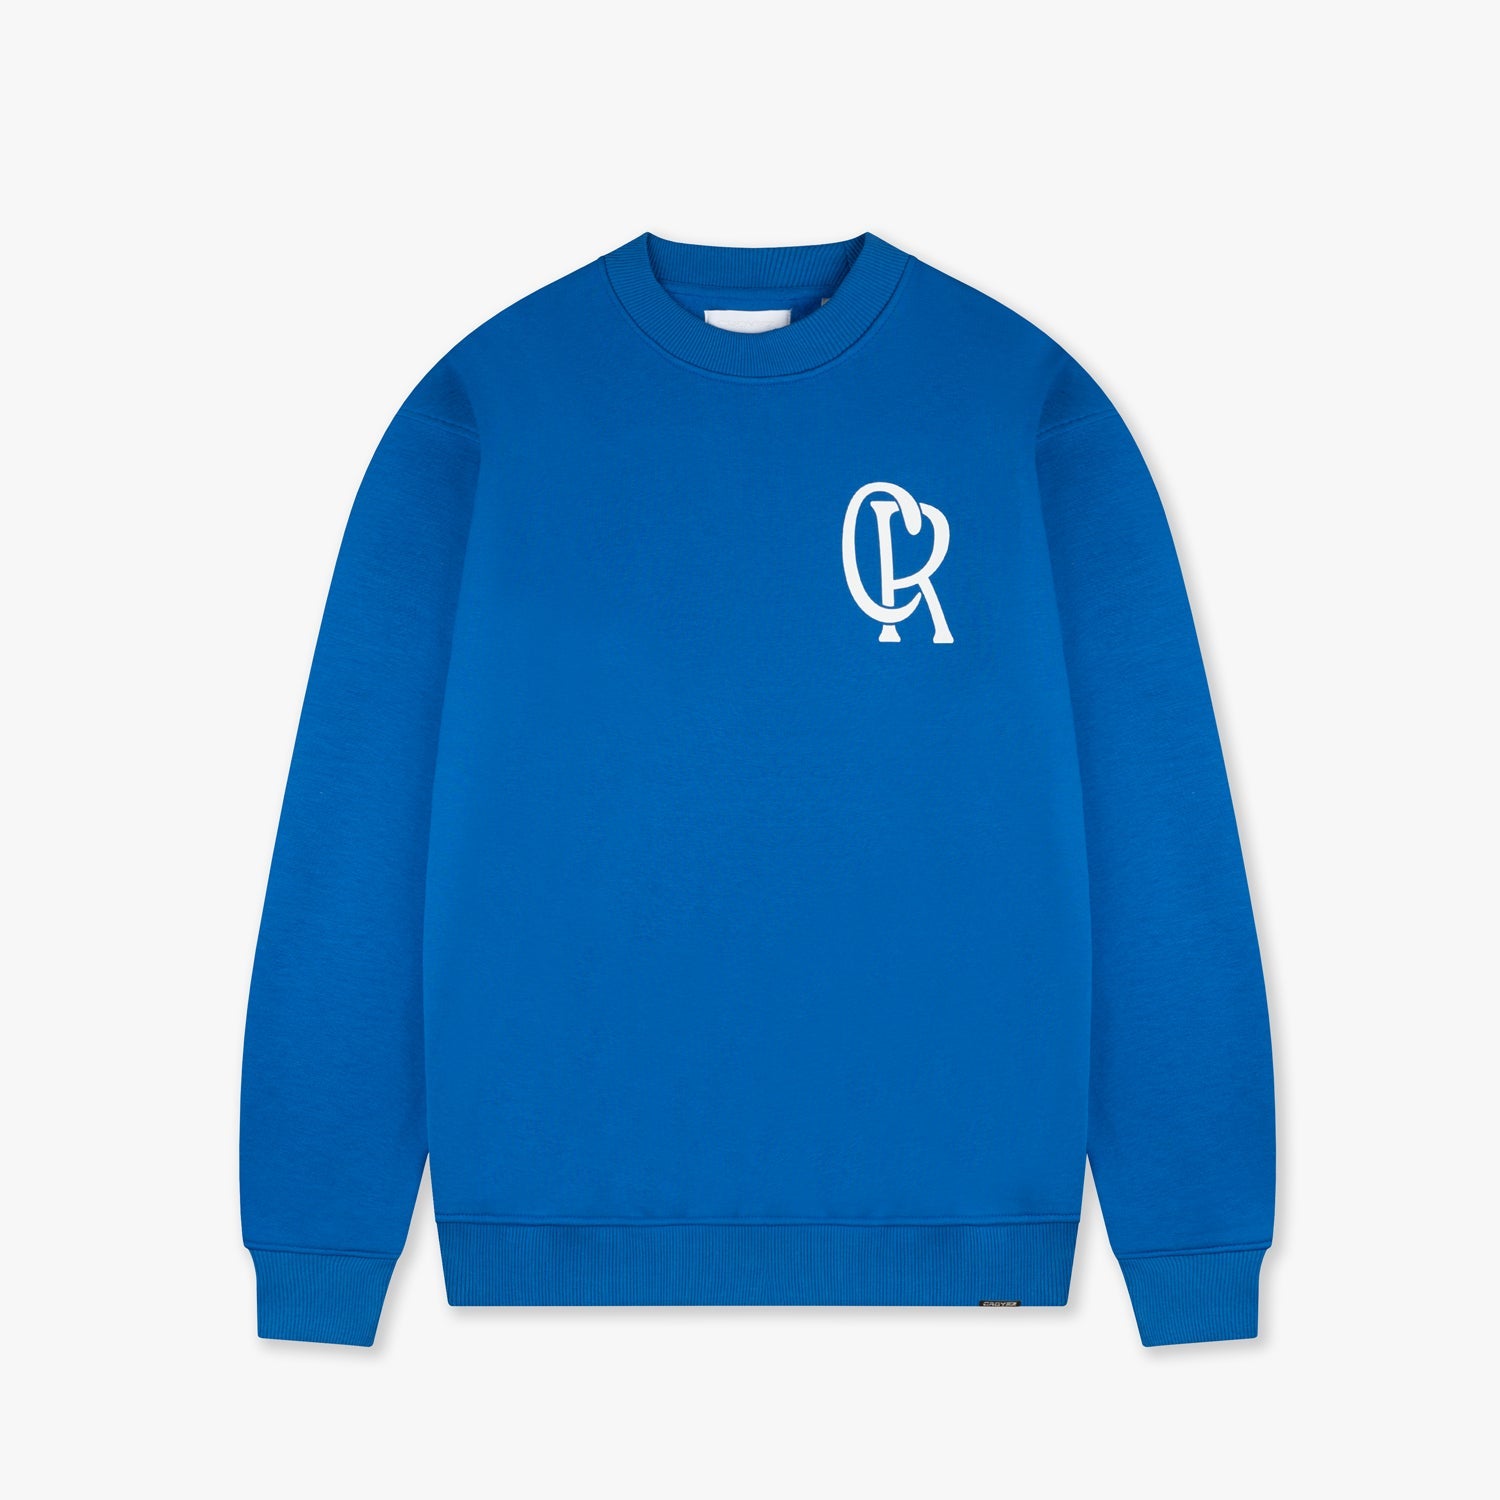 Croyez Initial Sweater Cobalt - Wit